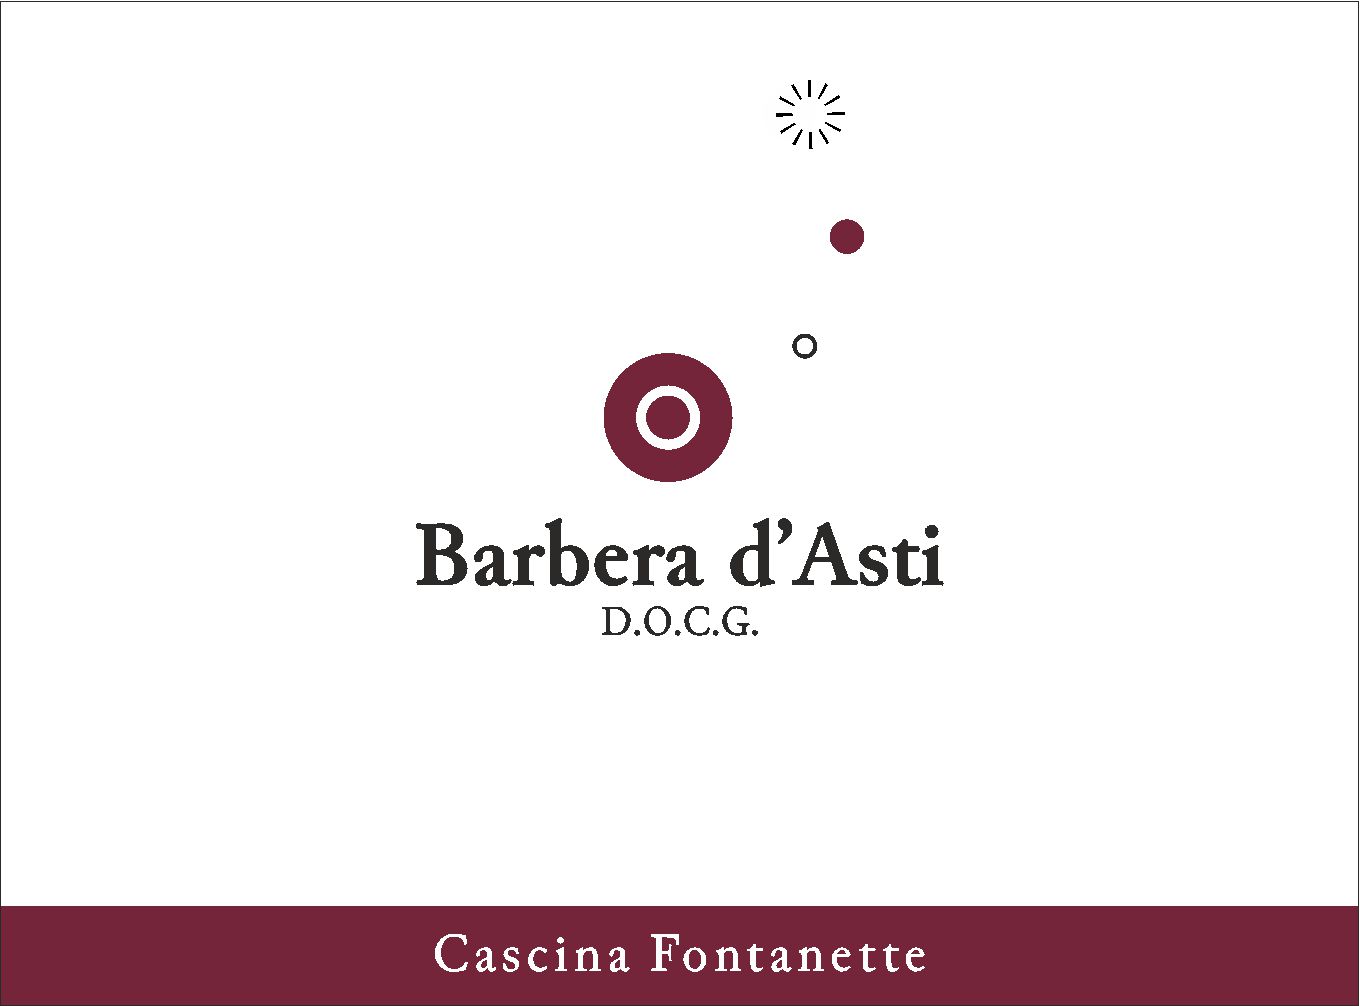 Barbera d’Asti DOCG - Cascina Fontanette (label)